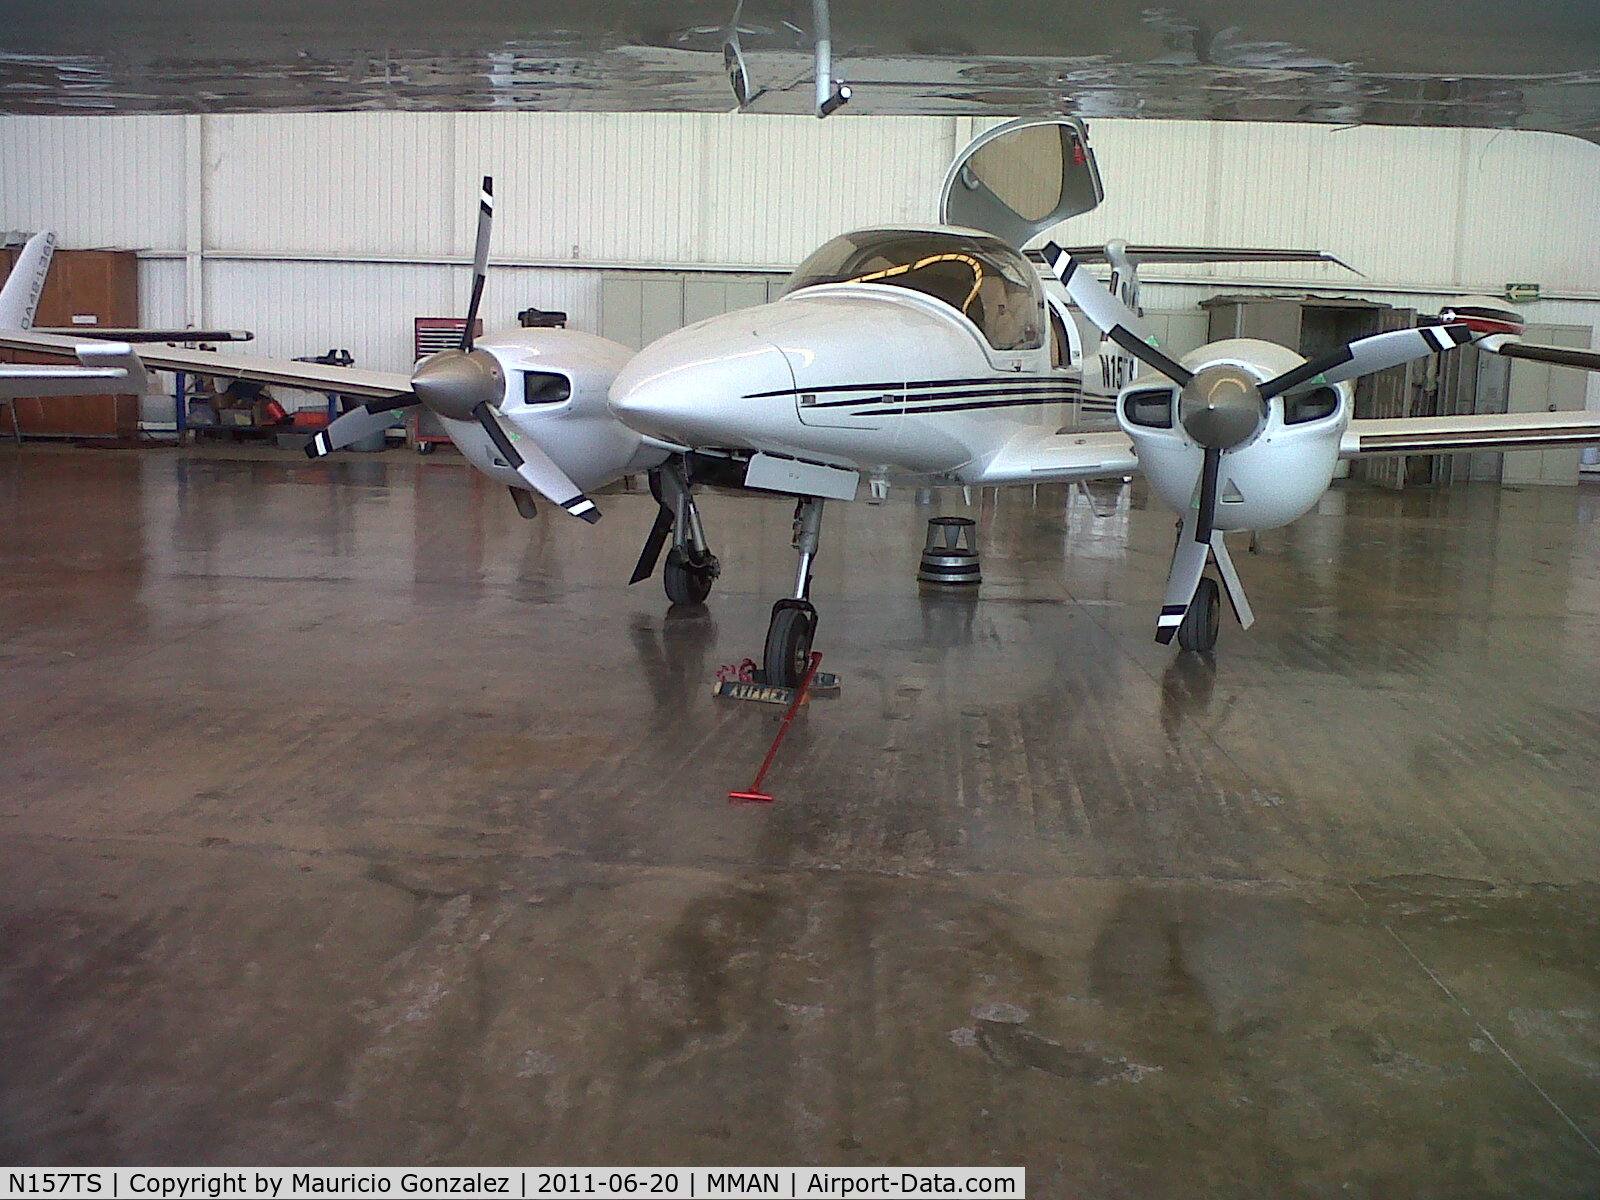 N157TS, Diamond DA-42 Twin Star C/N 42.AC121, Hangared at Avianet, MMAN. 
Monterrey, MX.